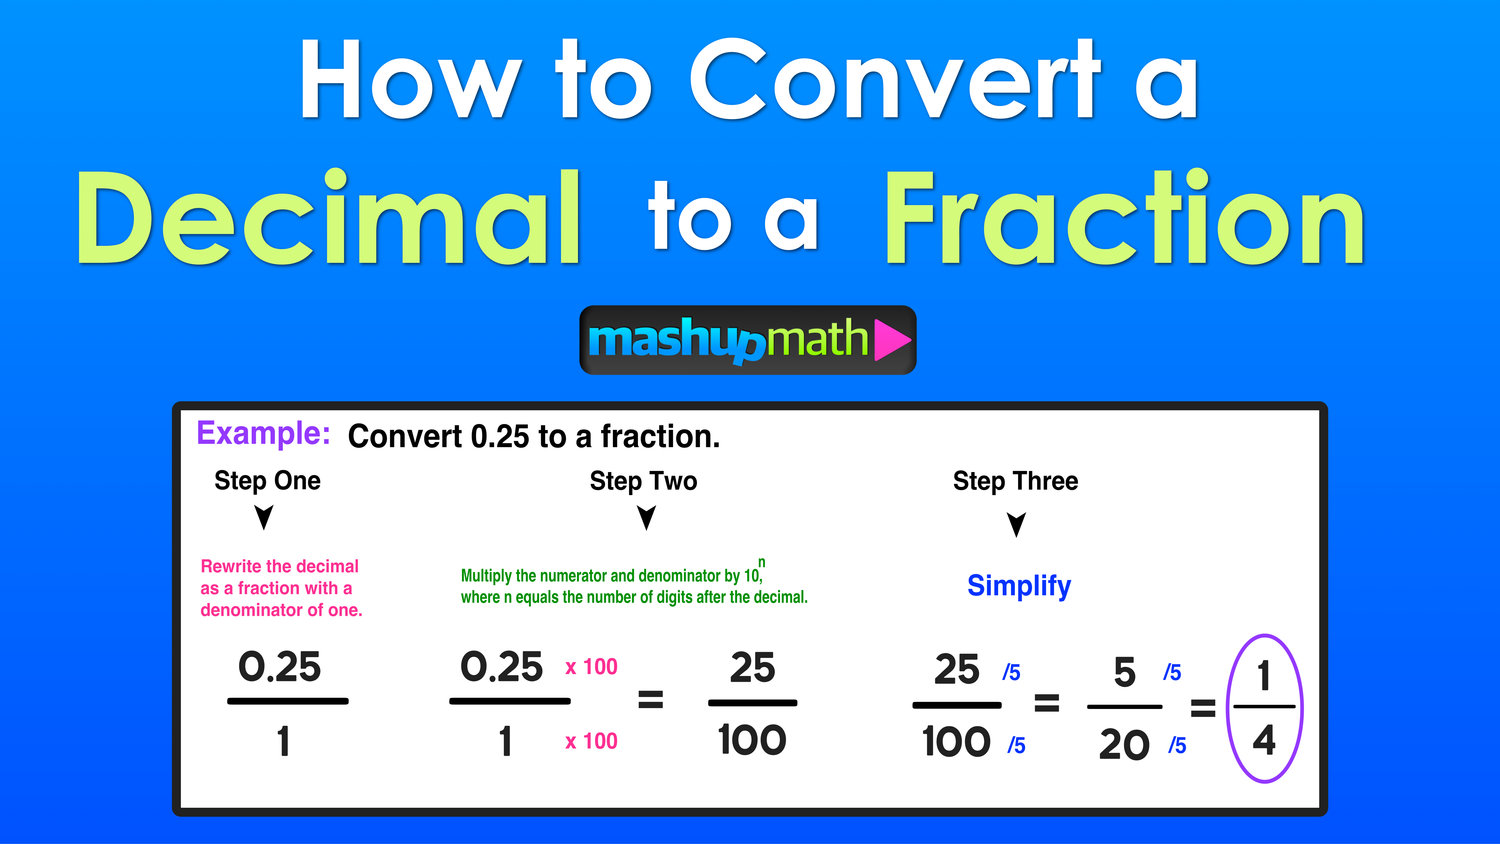 decimal-to-fraction-3-easy-steps-mashup-math